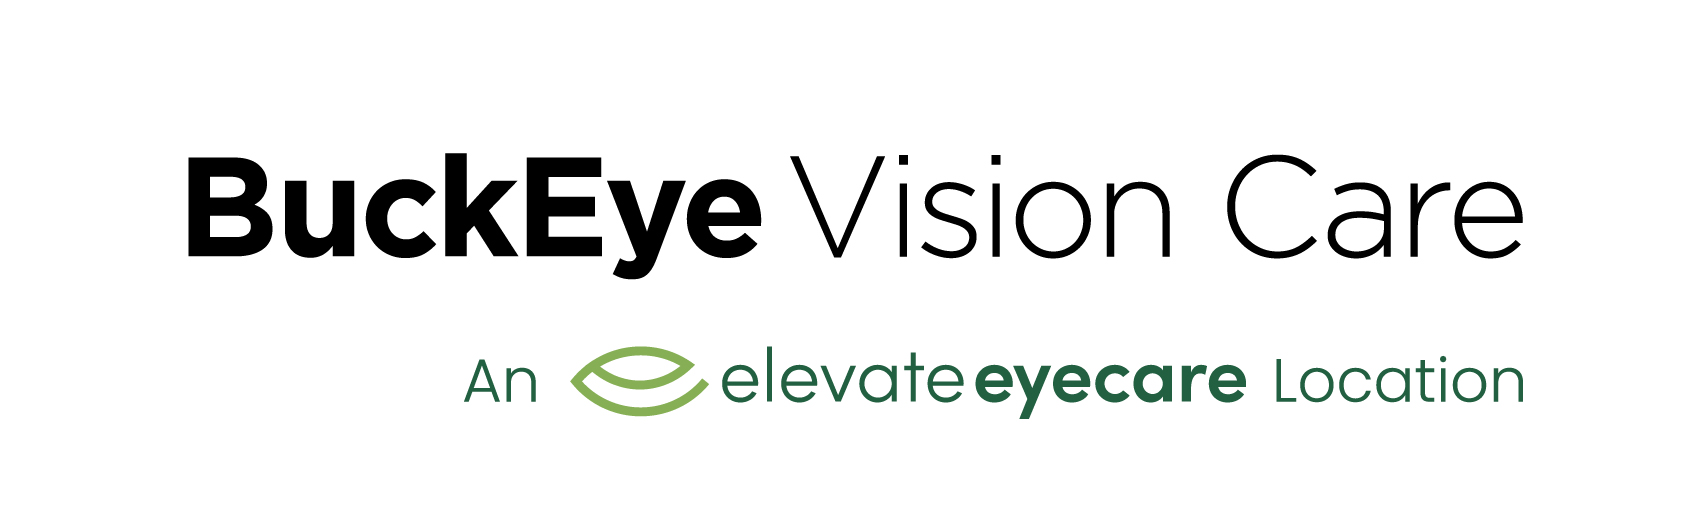 BuckEye Vision Care logo